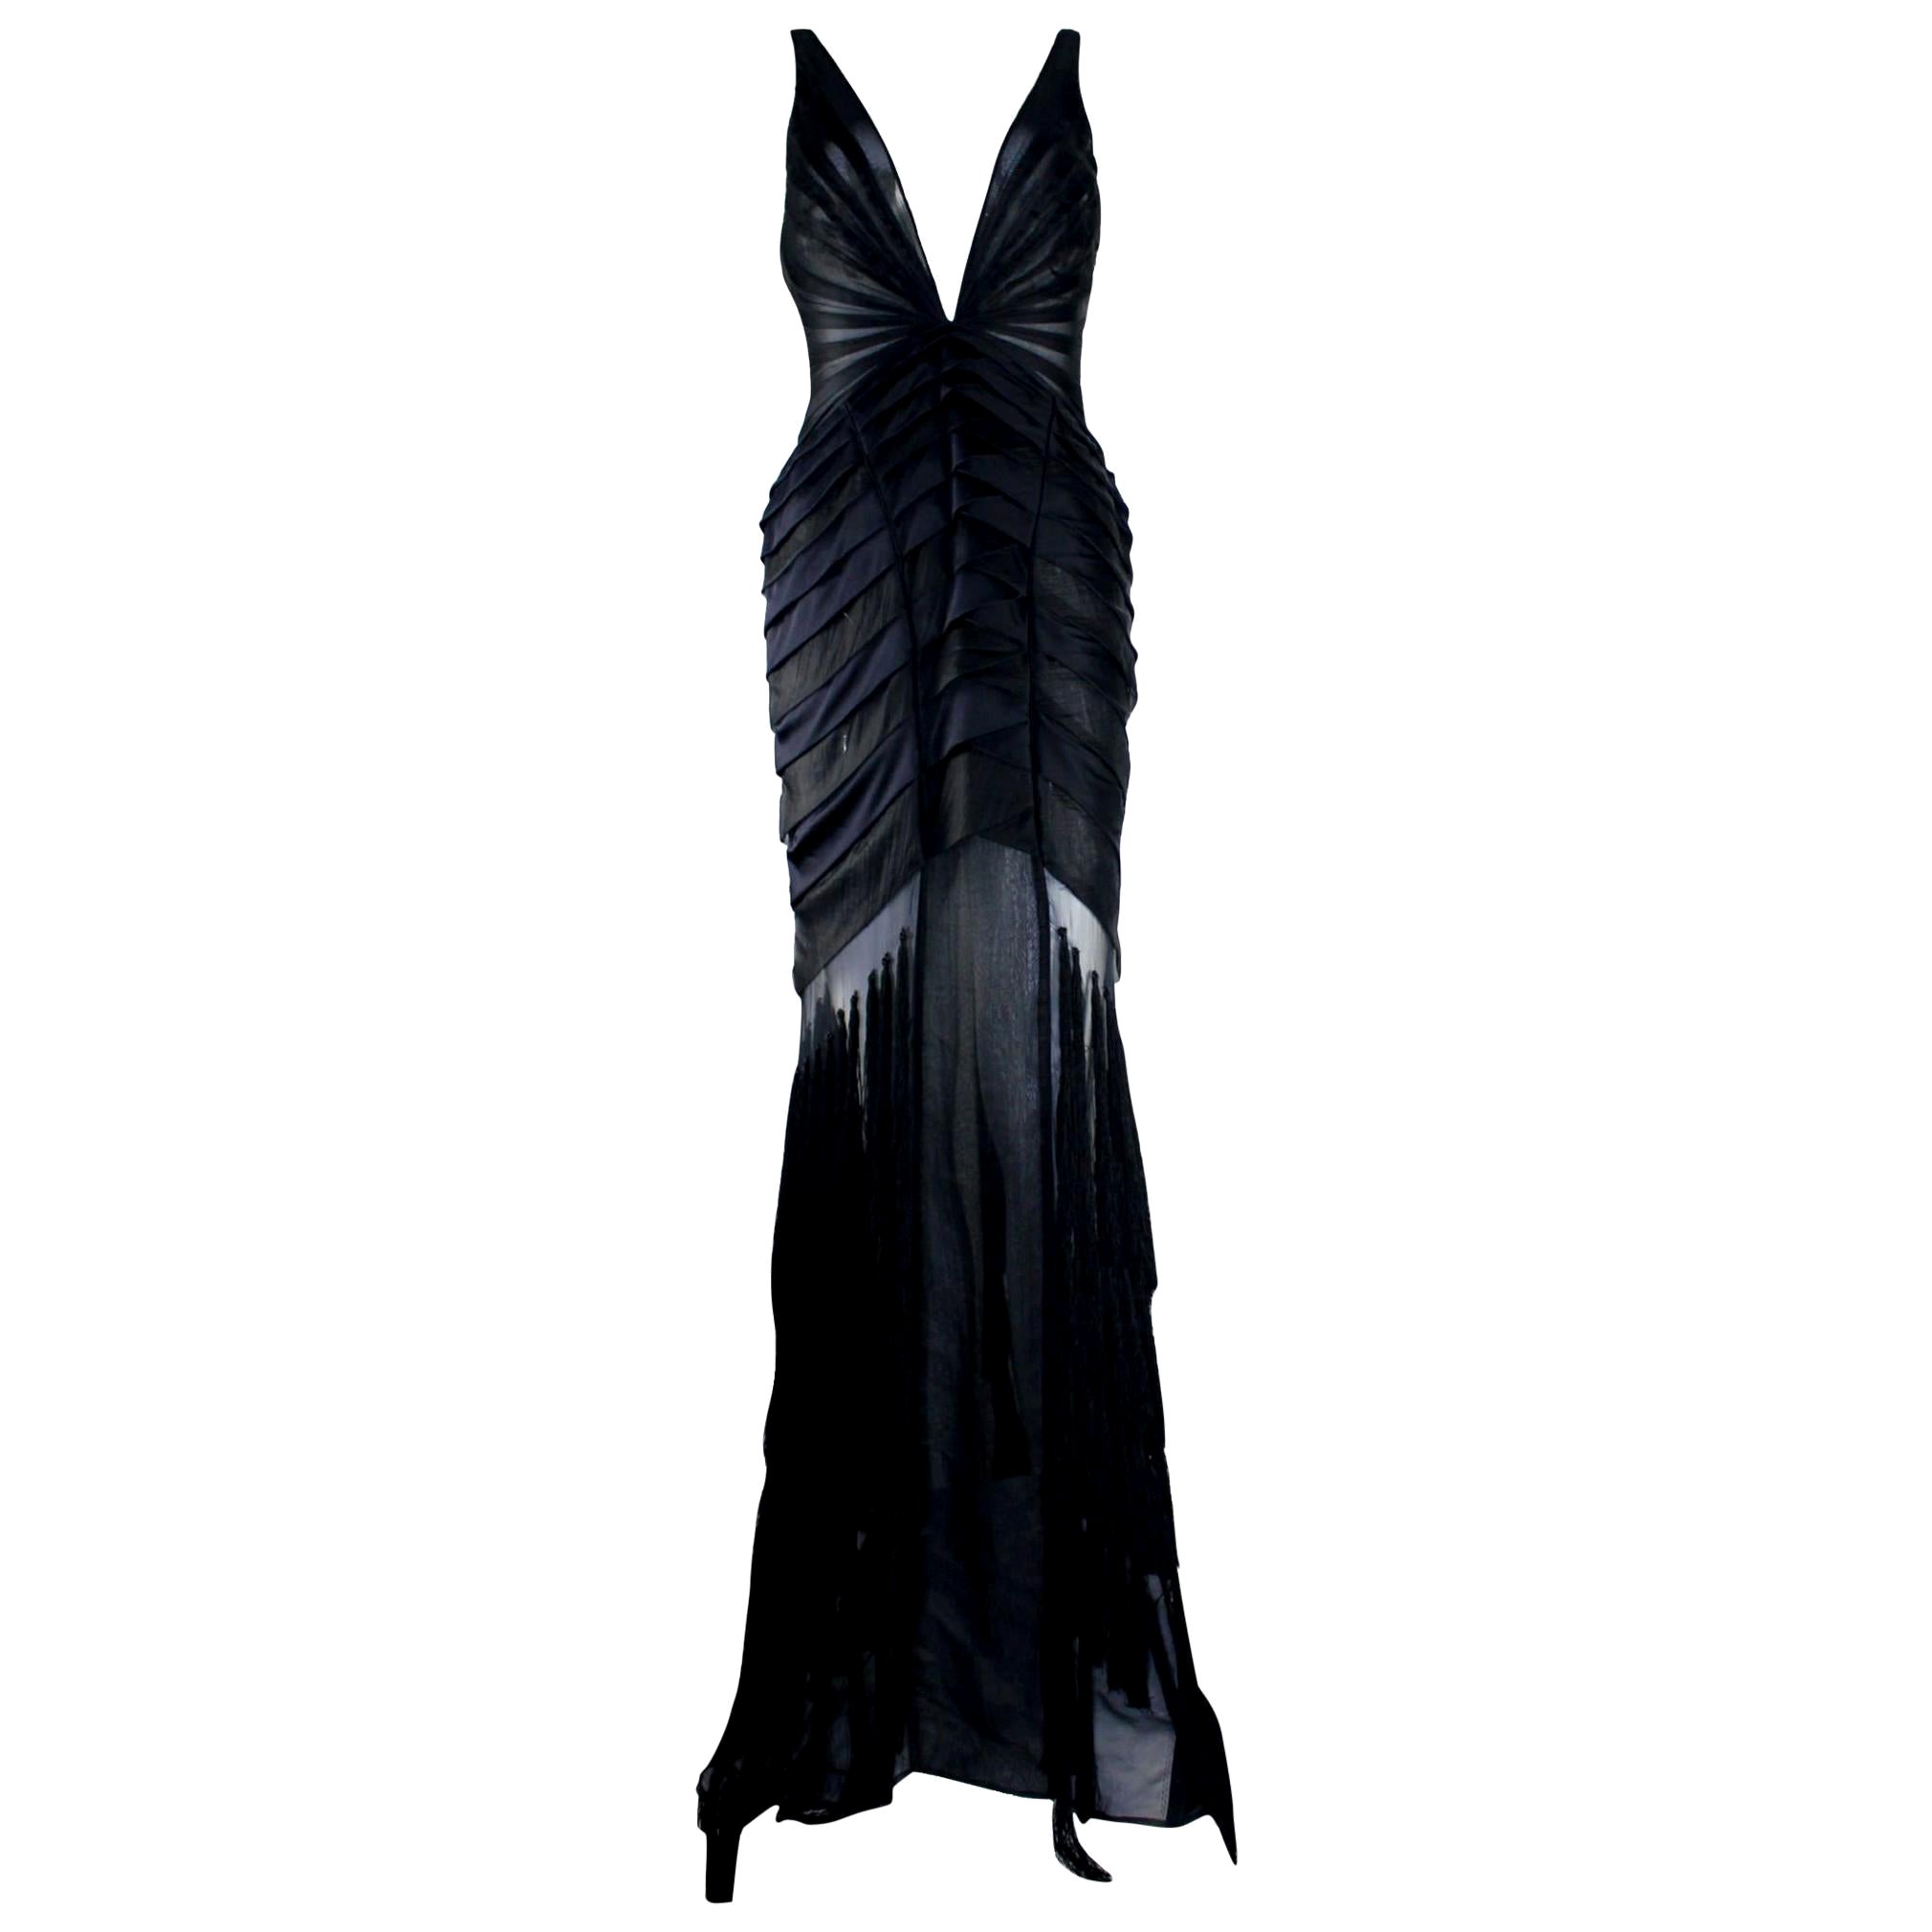 UNWORN Gucci by Tom Ford FW 2004 Black Silk & Tassle Evening Gown Dress 40 For Sale